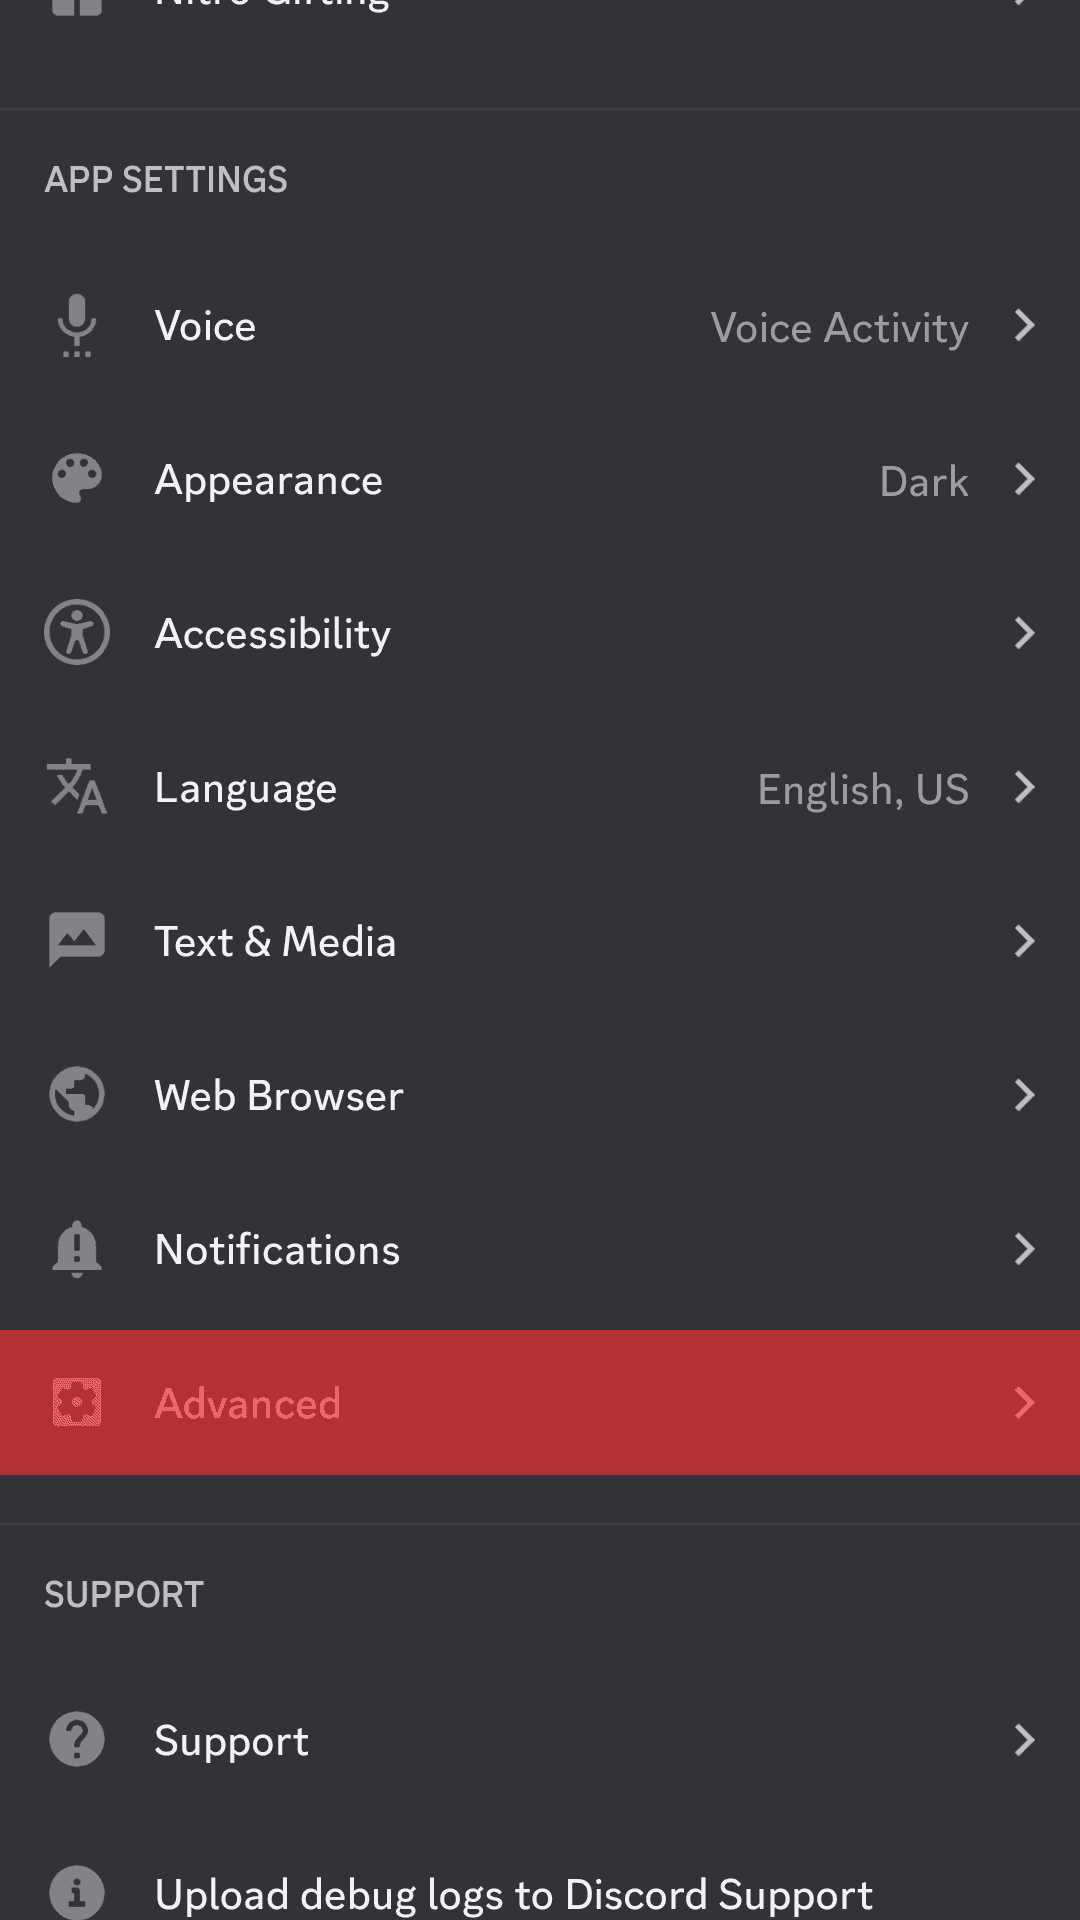 Select Advanced Under App Settings